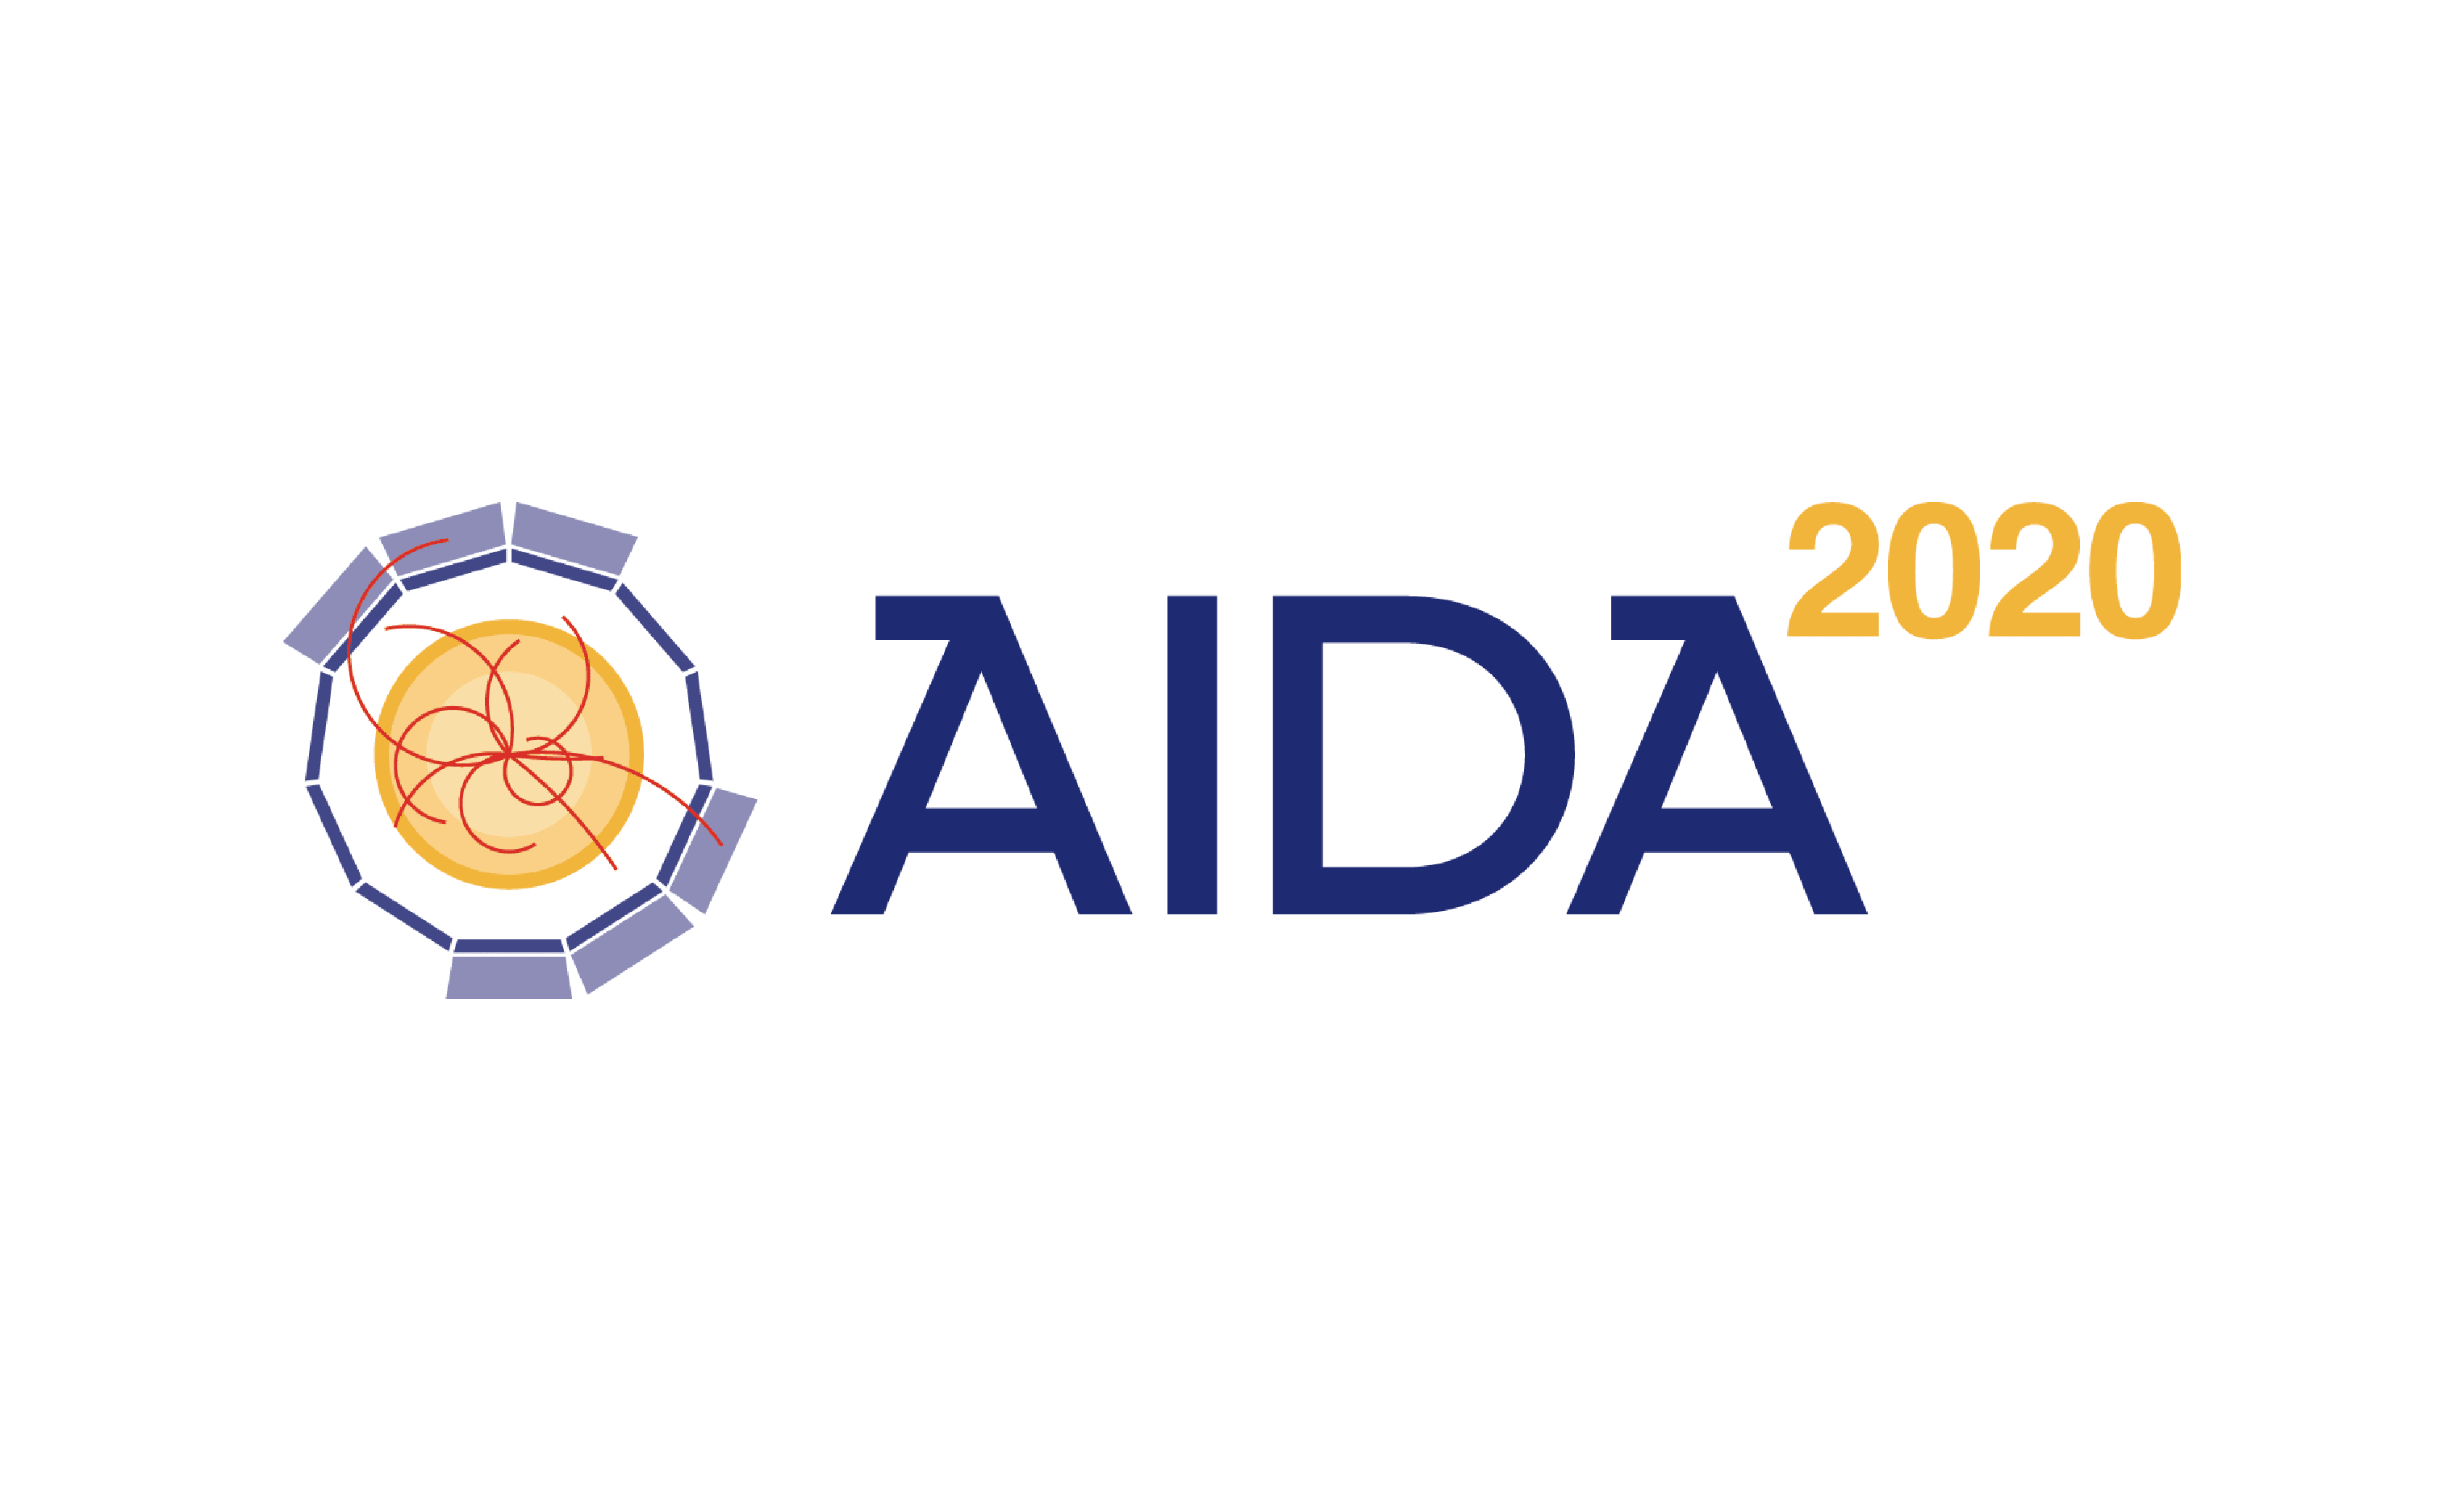 AIDA 2020